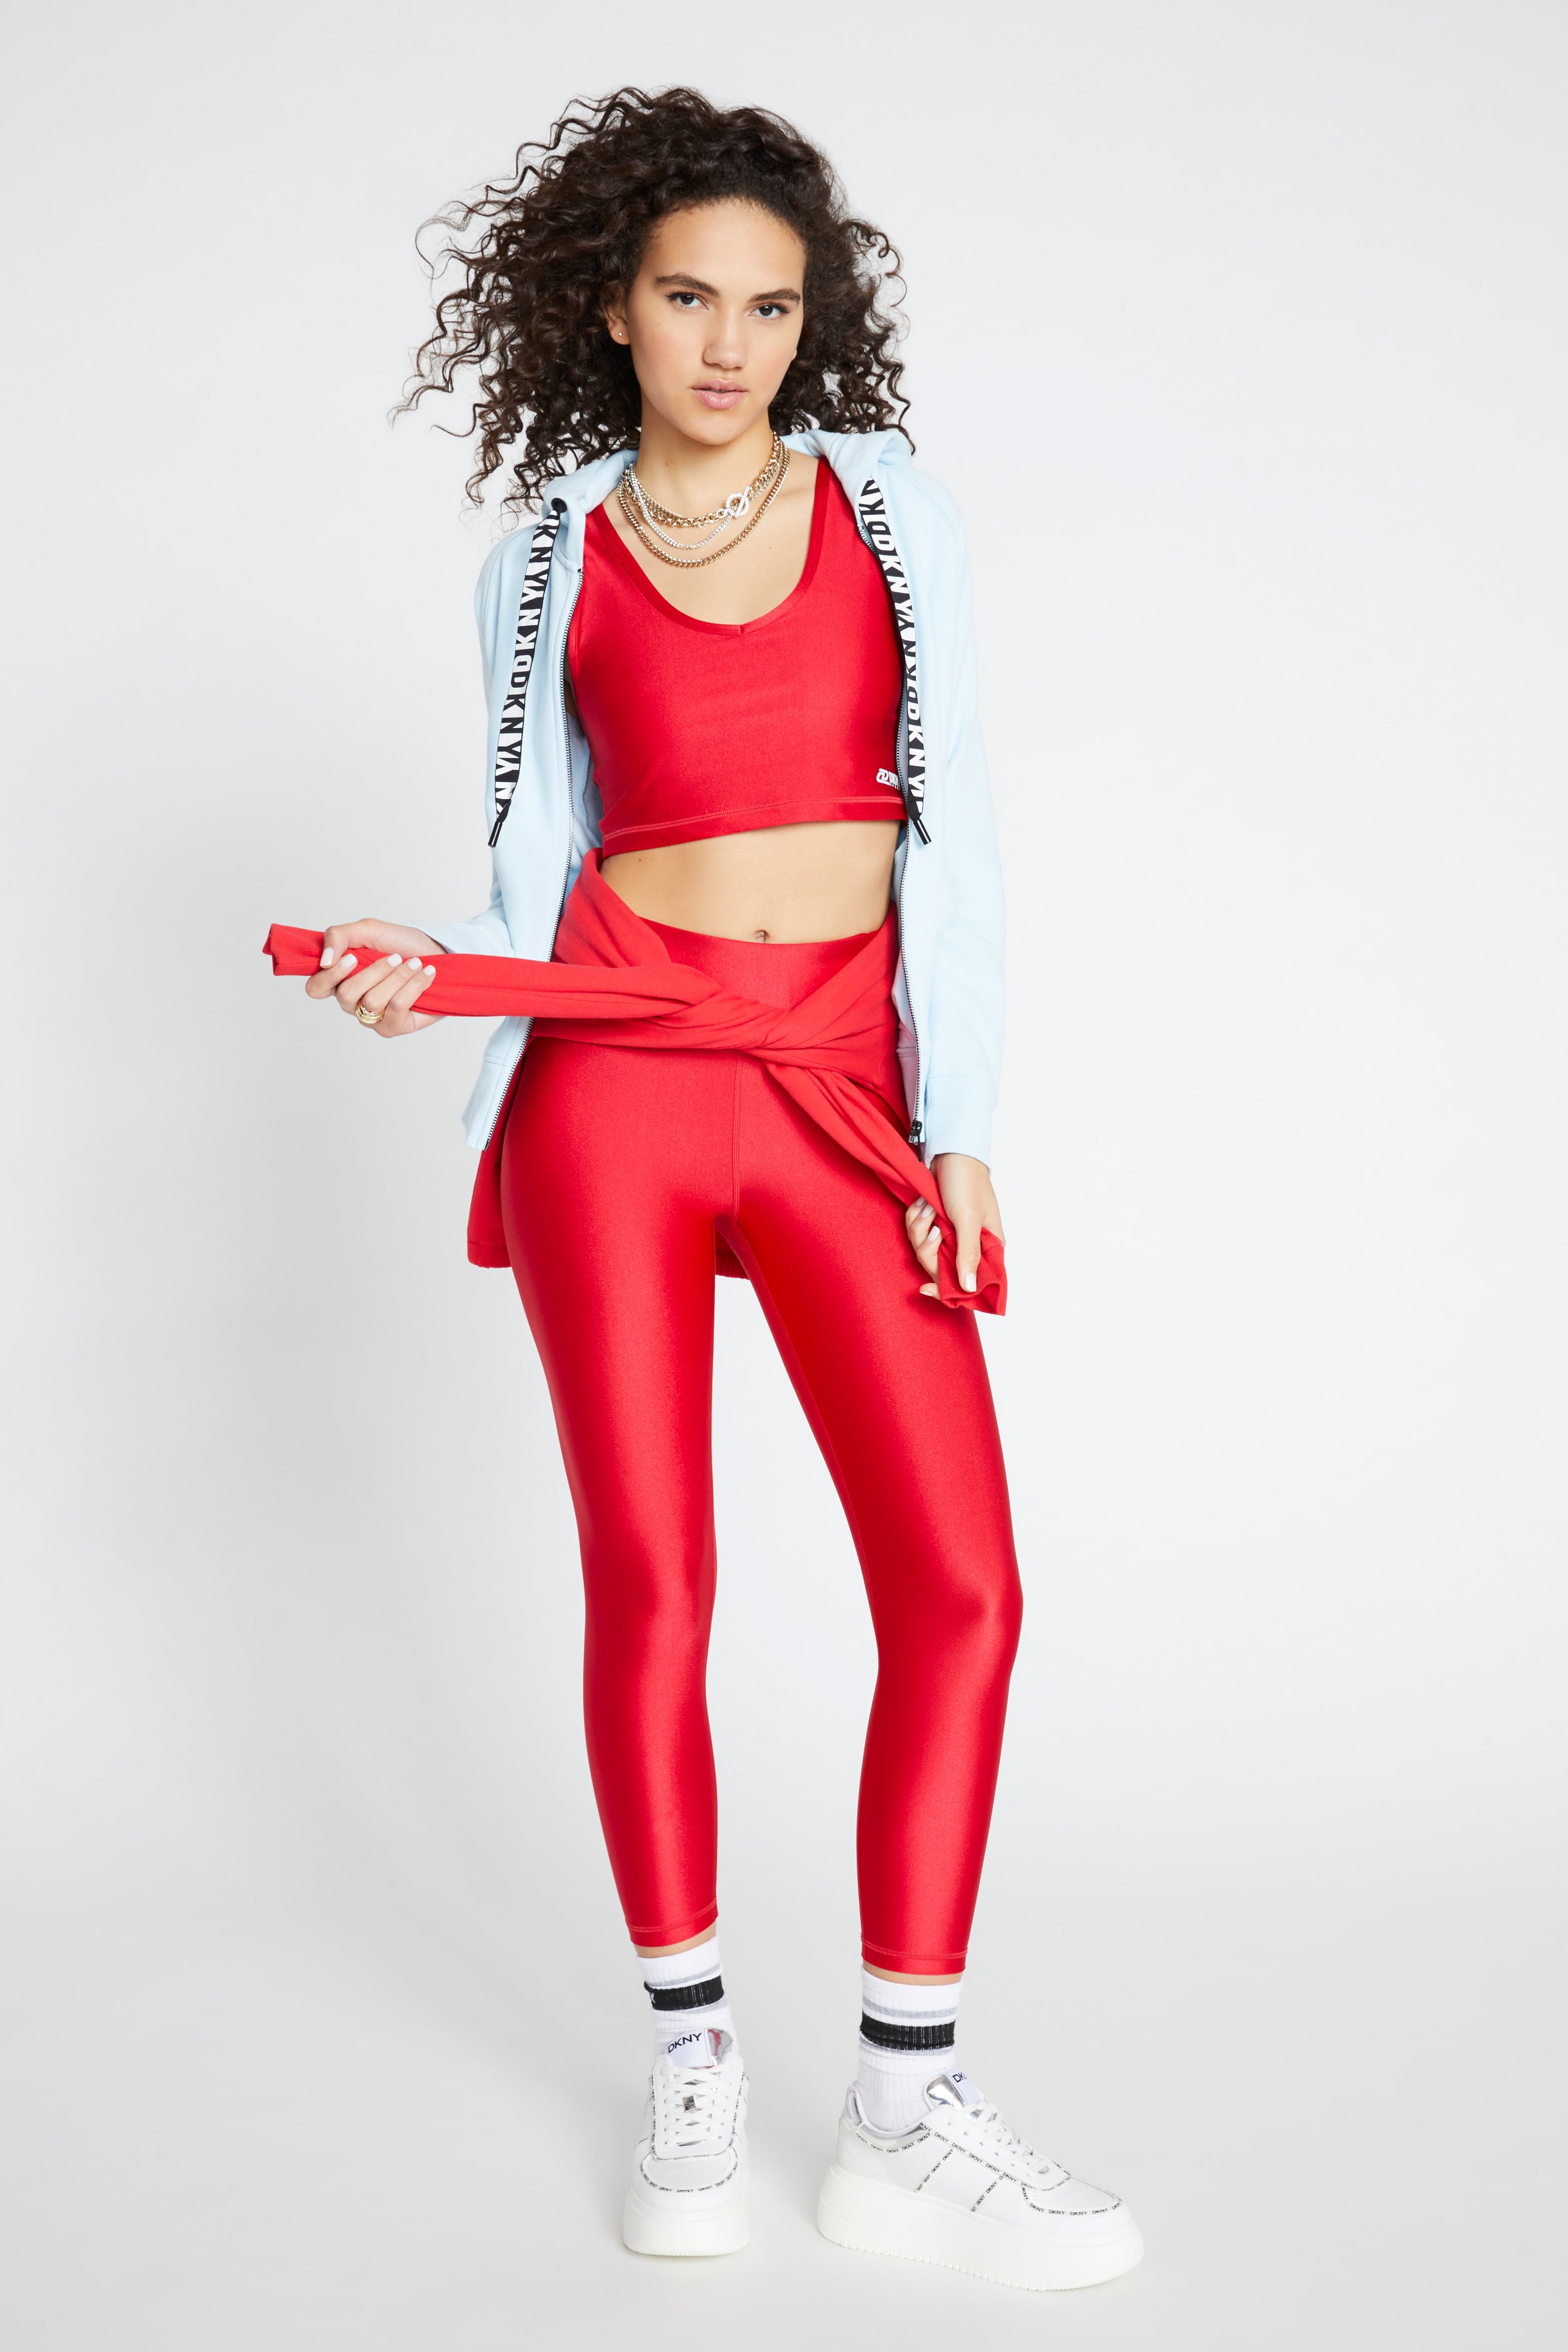 DKNY Women's Sport Leggings, blacksilver, XS : Amazon.co.uk: Fashion